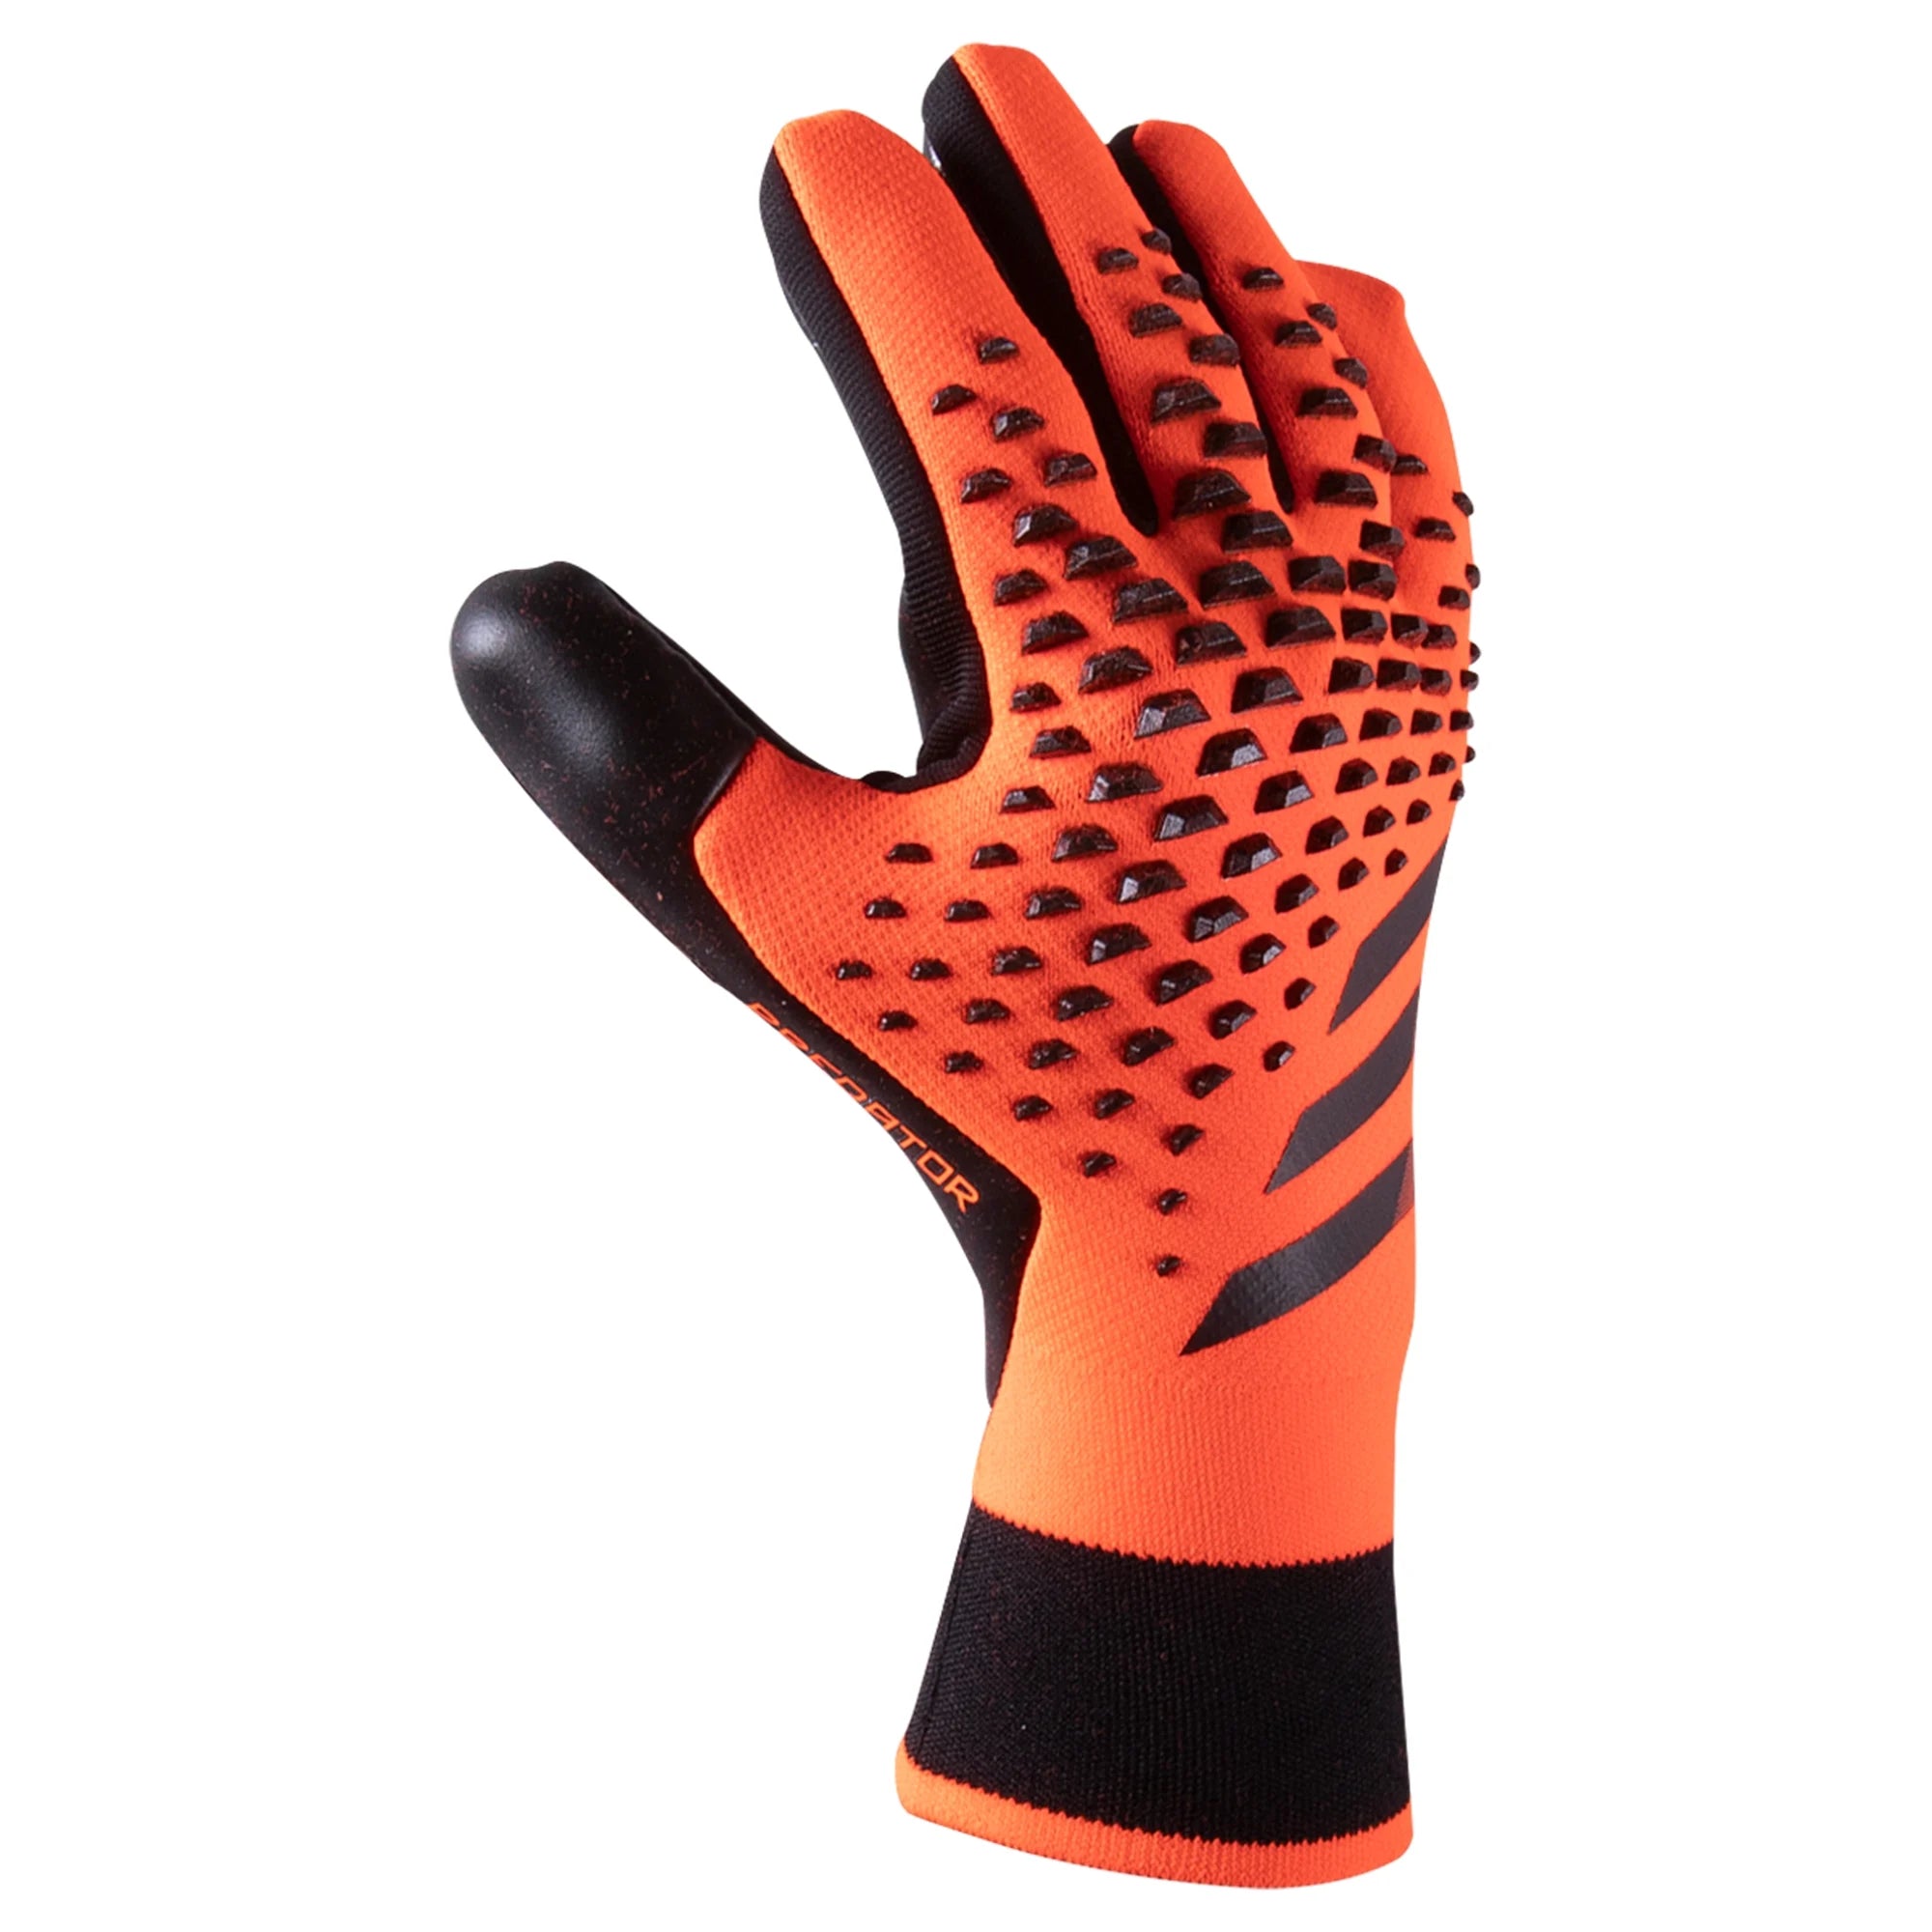 Adidas Predator Pro Goalkeeper Gloves Orange - Size 7